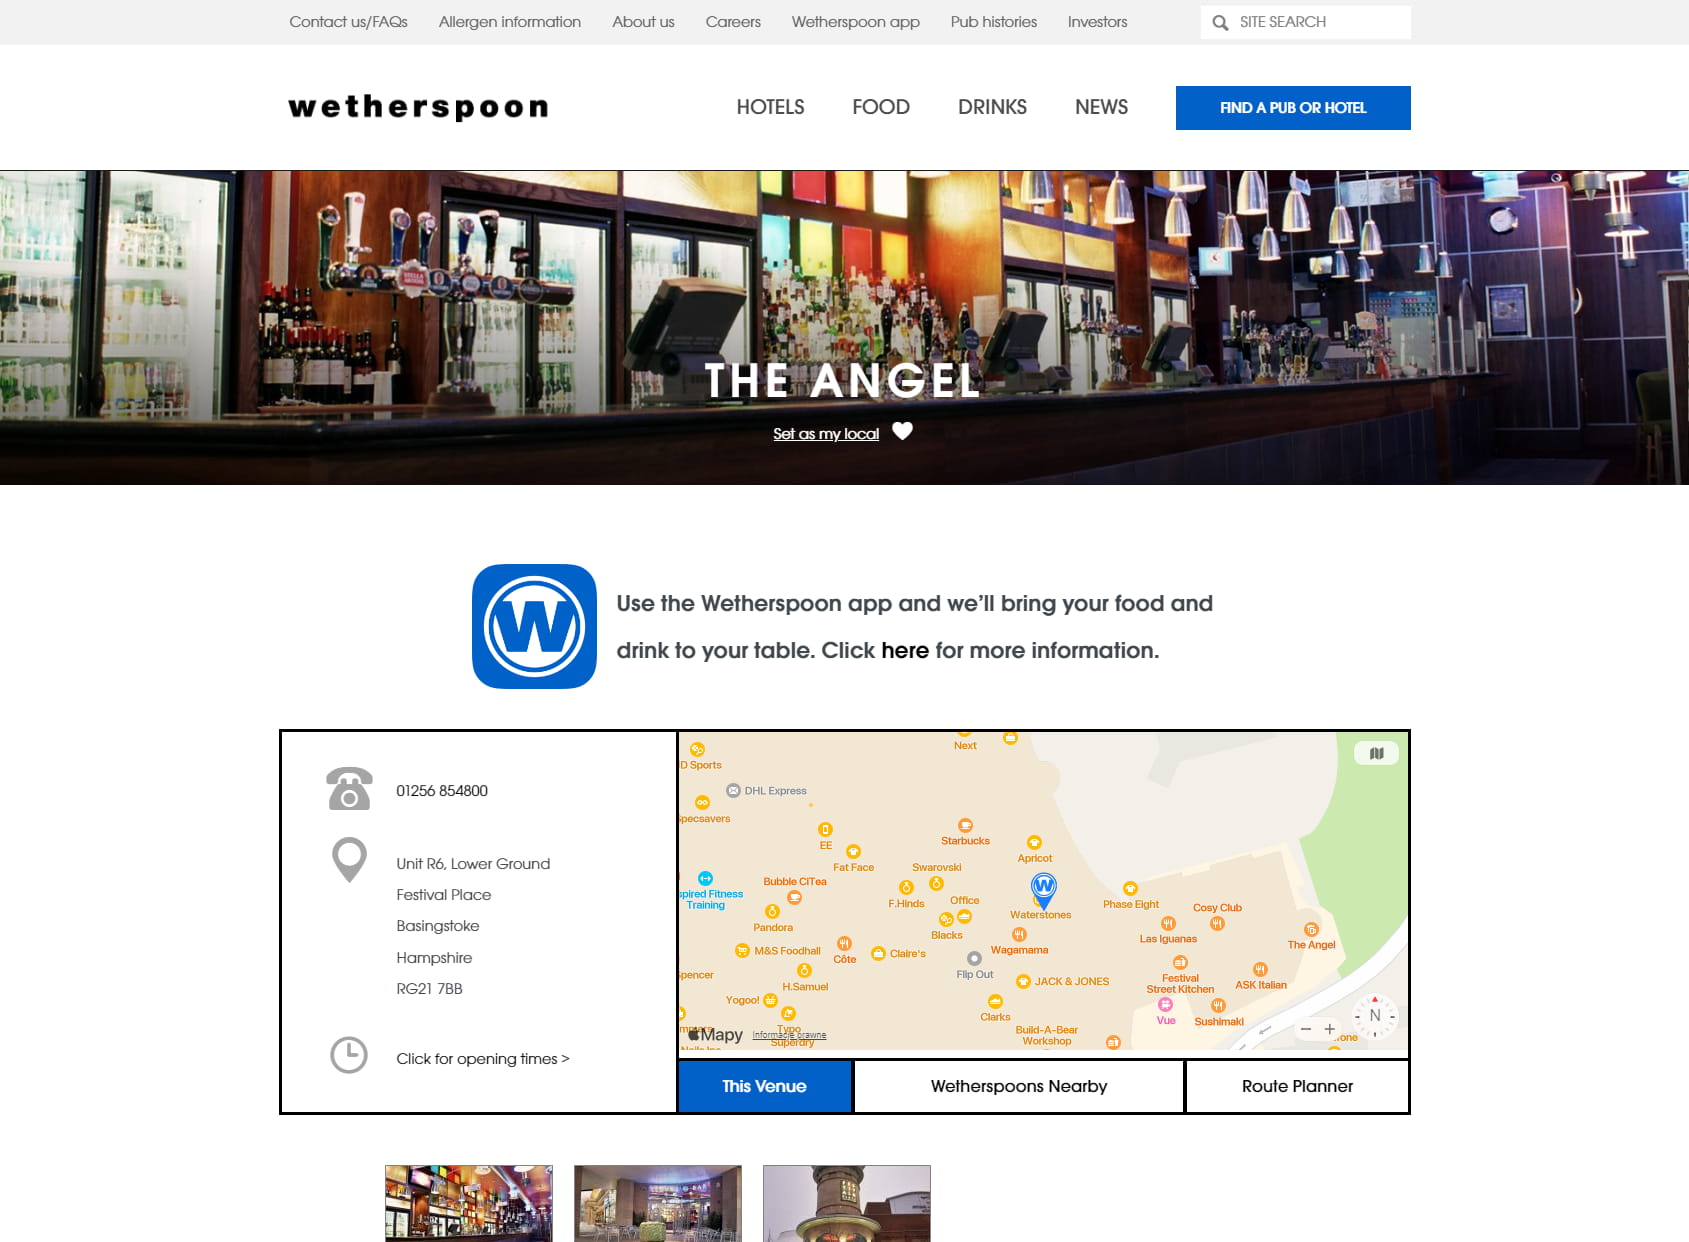 The Angel - JD Wetherspoon